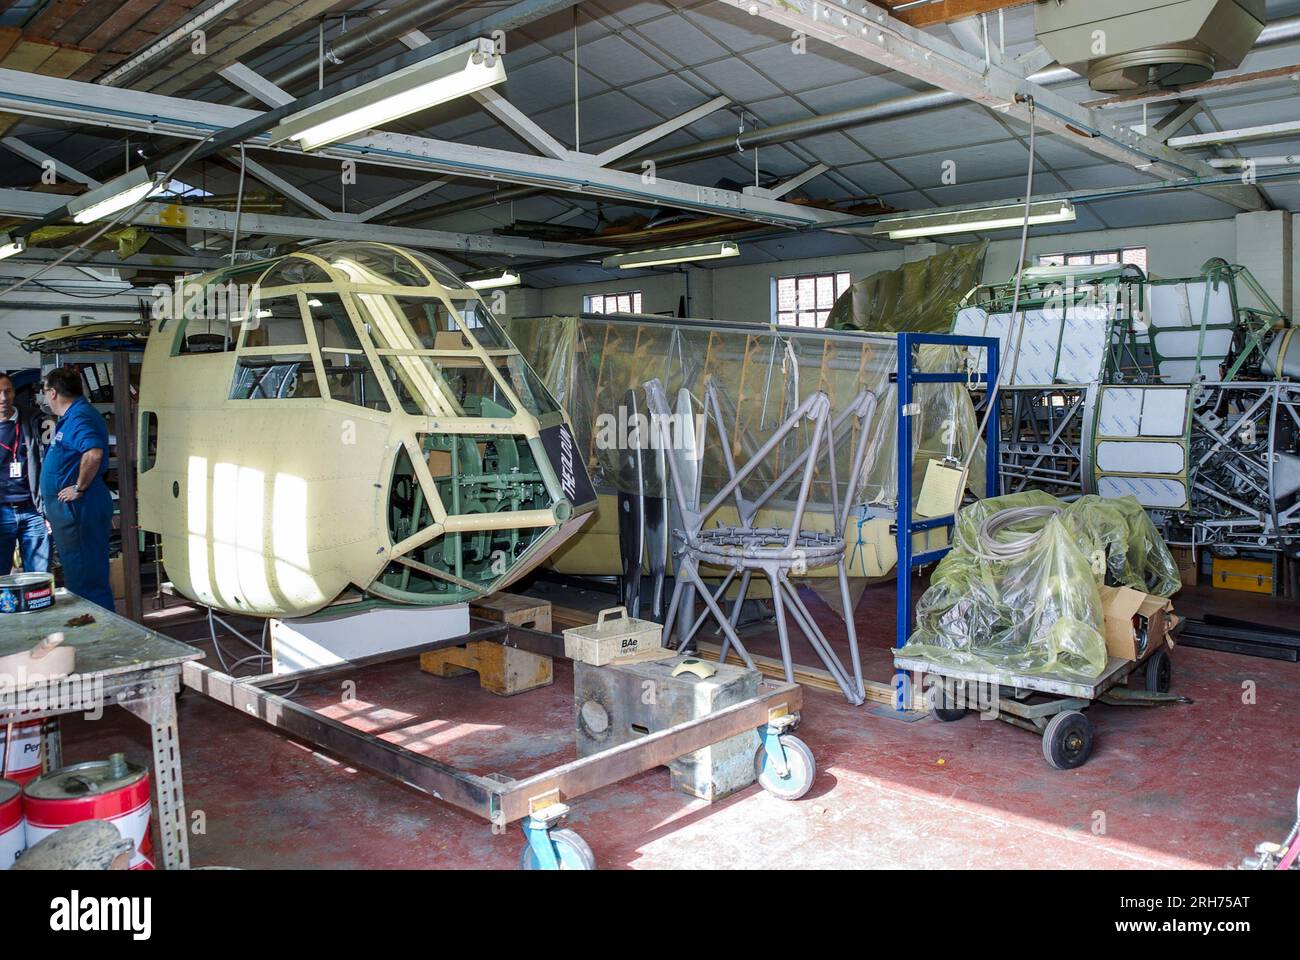 Bristol Blenheim Mk I nose section inside the Aircraft Restoration Company workshop at Duxford, UK. ARCo building 66 Stock Photo